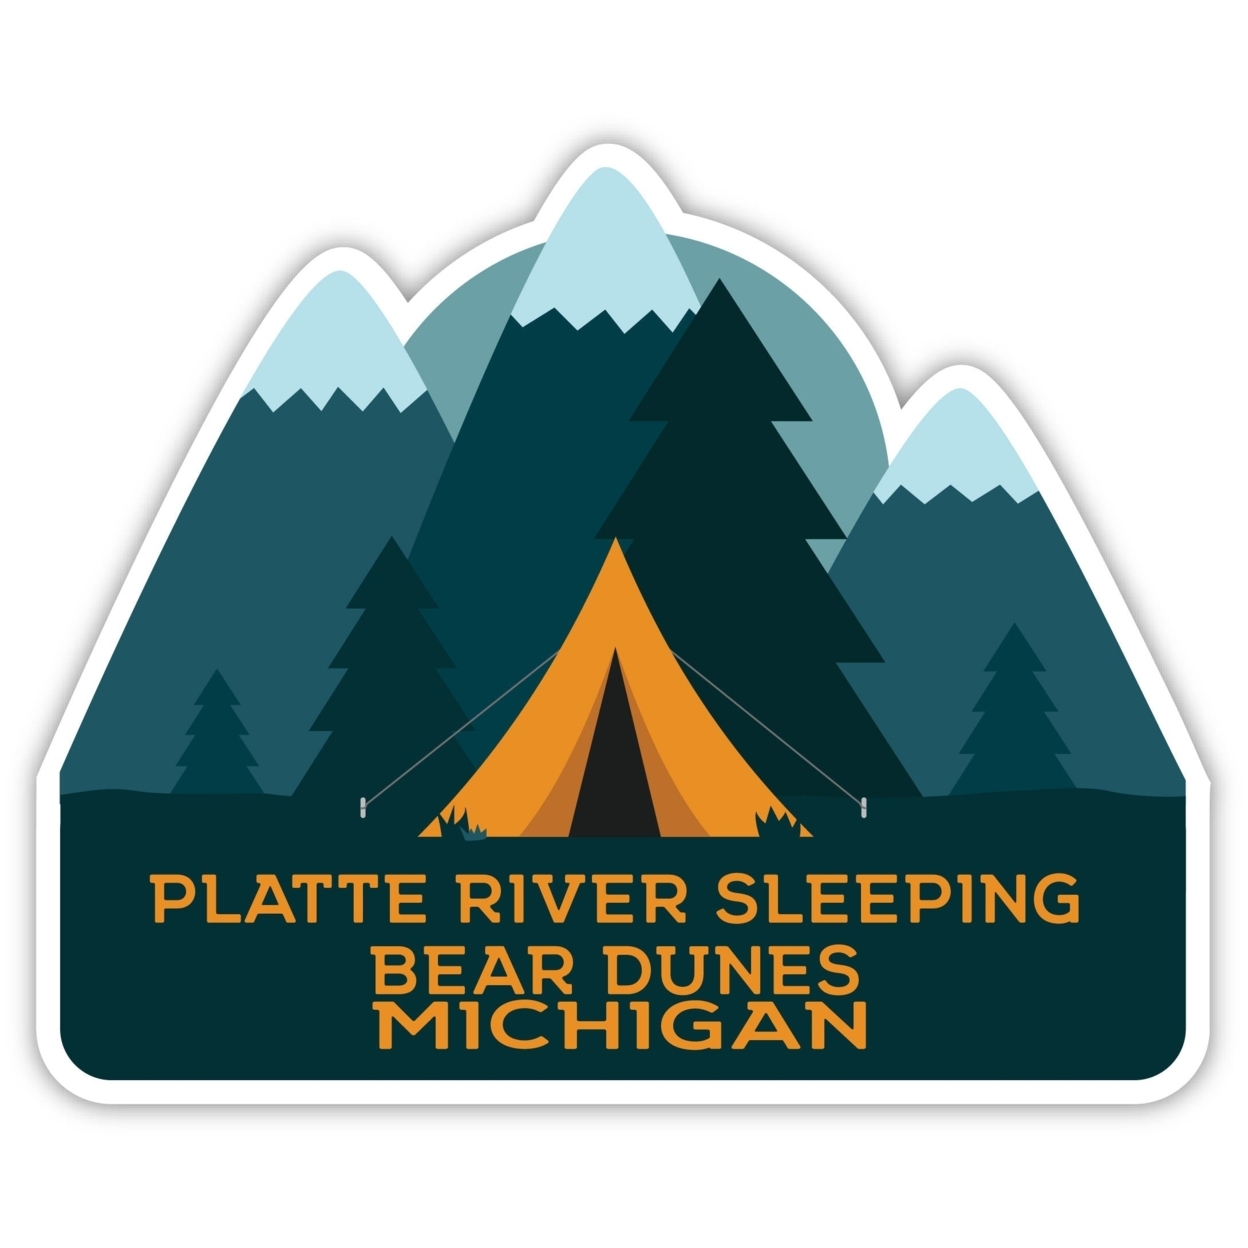 Platte River Sleeping Bear Dunes Michigan Souvenir Decorative Stickers (Choose Theme And Size) - Single Unit, 4-Inch, Tent